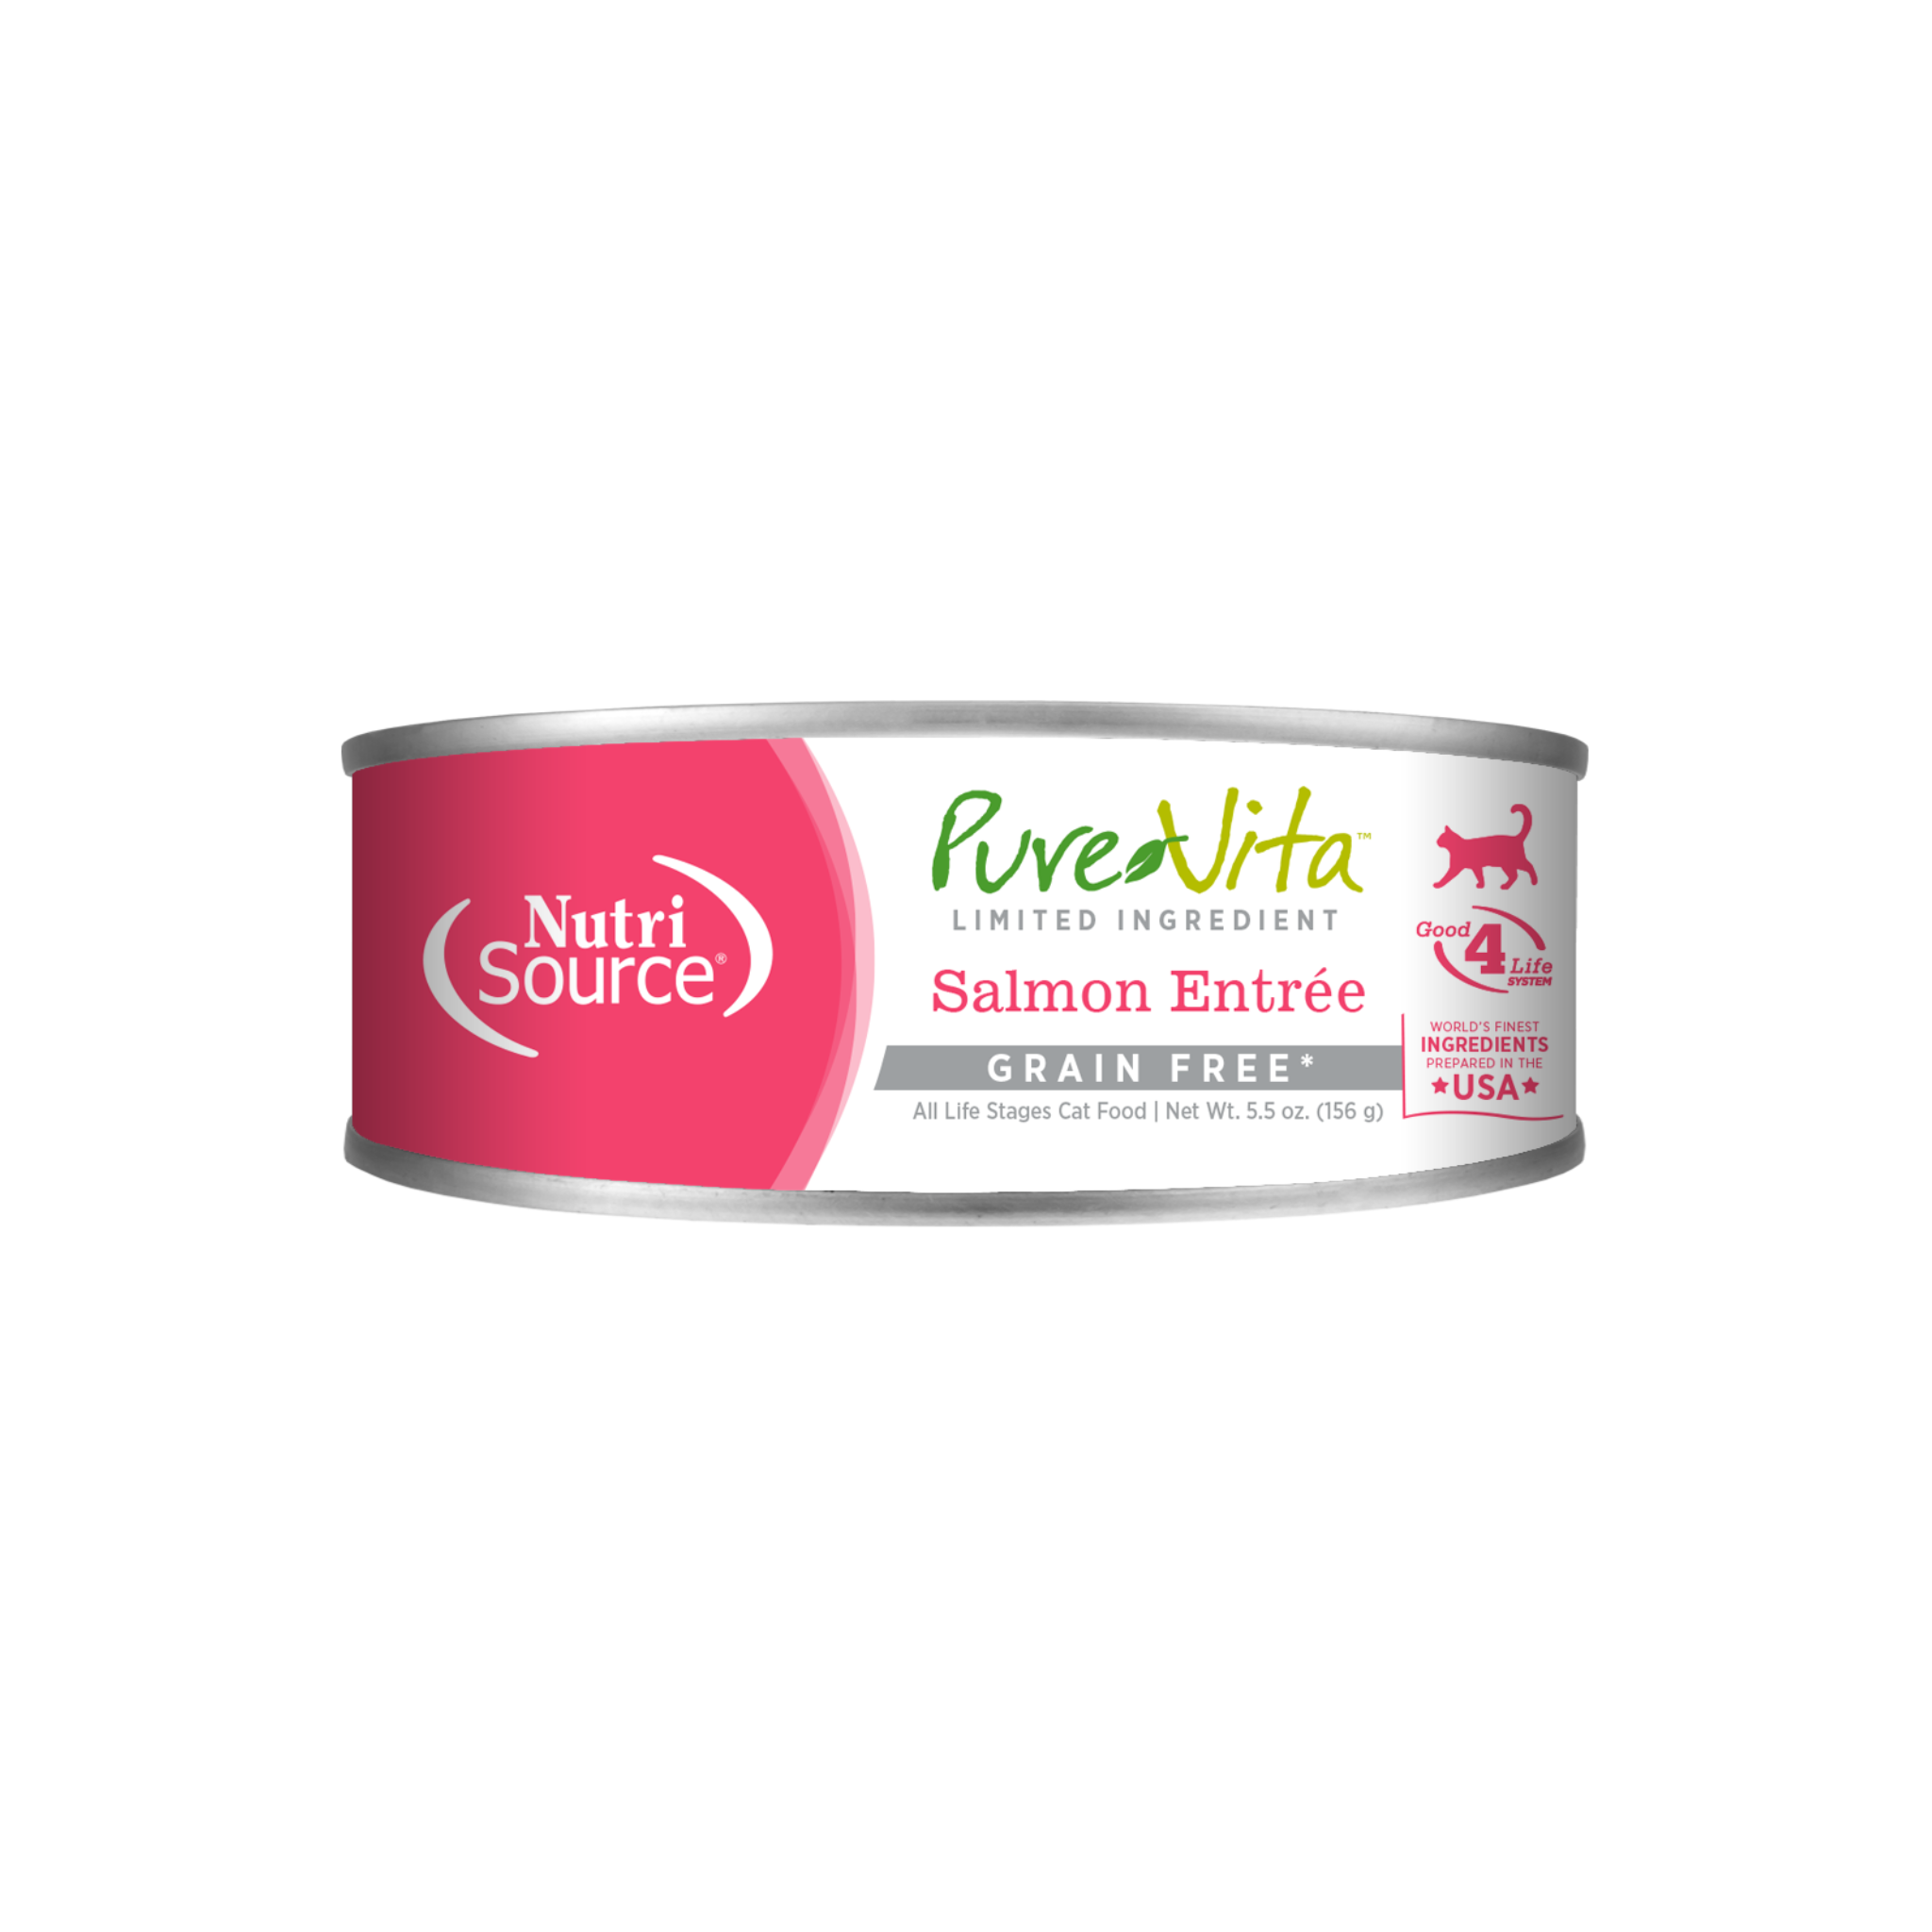 Nutrisource Pure Vita Limited Ingredient Grain Free Salmon Entrée Cat Canned